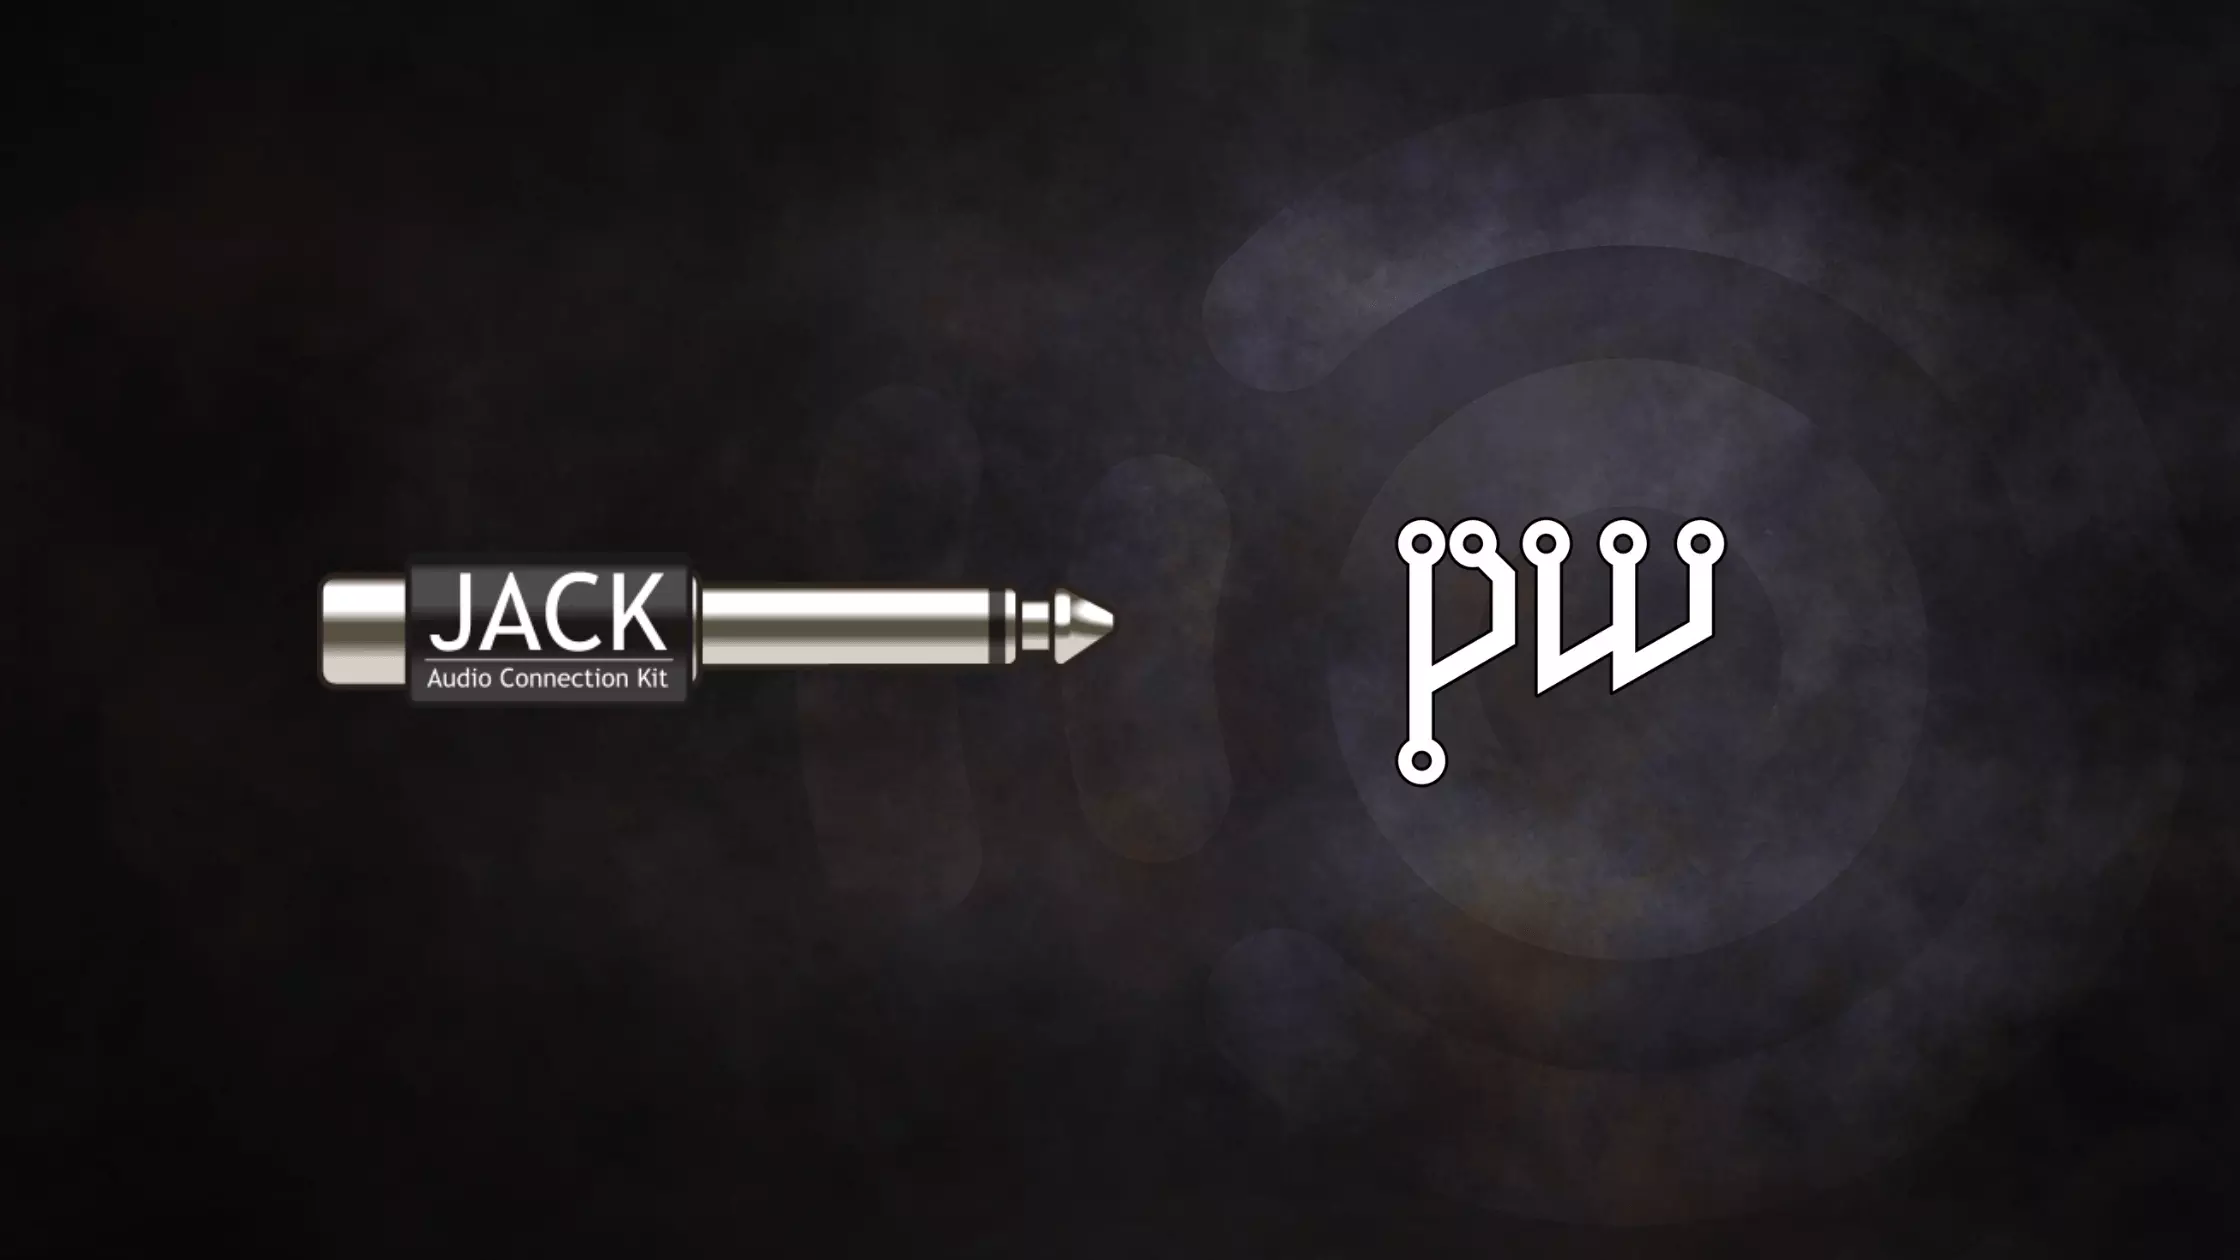 JACK and Pipewire logos superimposed on the Ubuntu Studio wallpaper